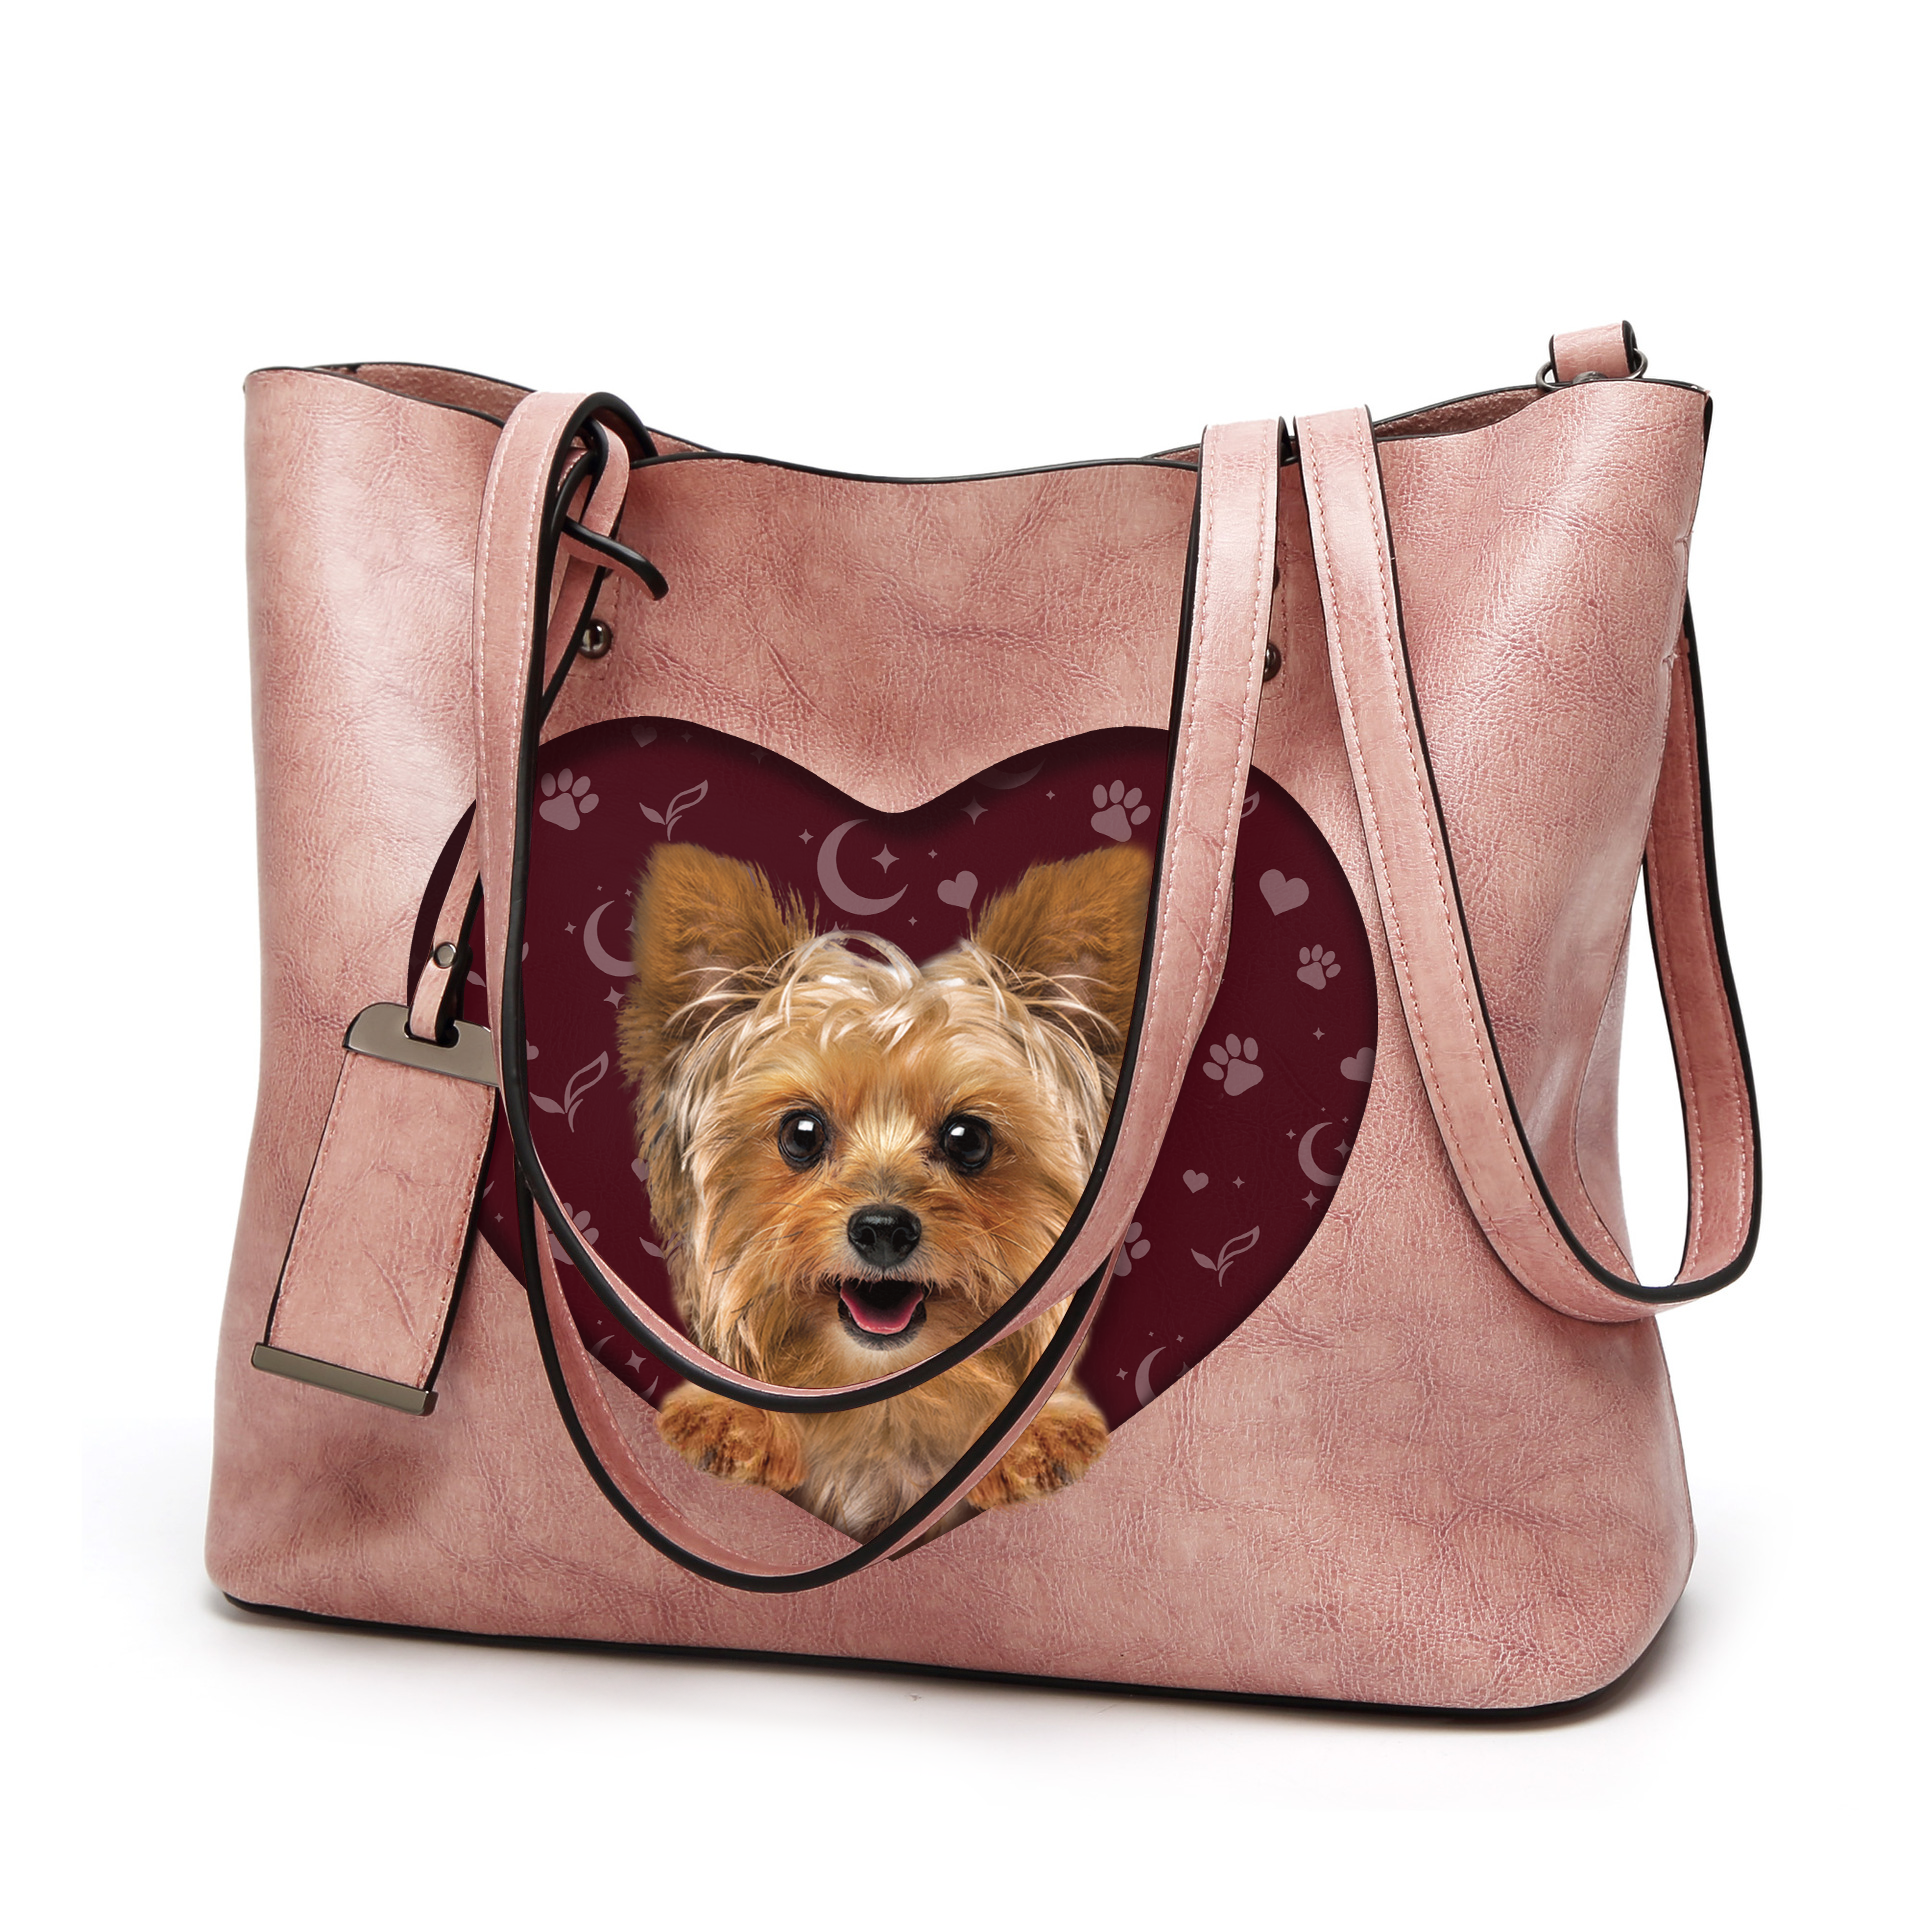 I Know I'm Cute - Yorkshire Terrier Glamour Handbag V2 - 8